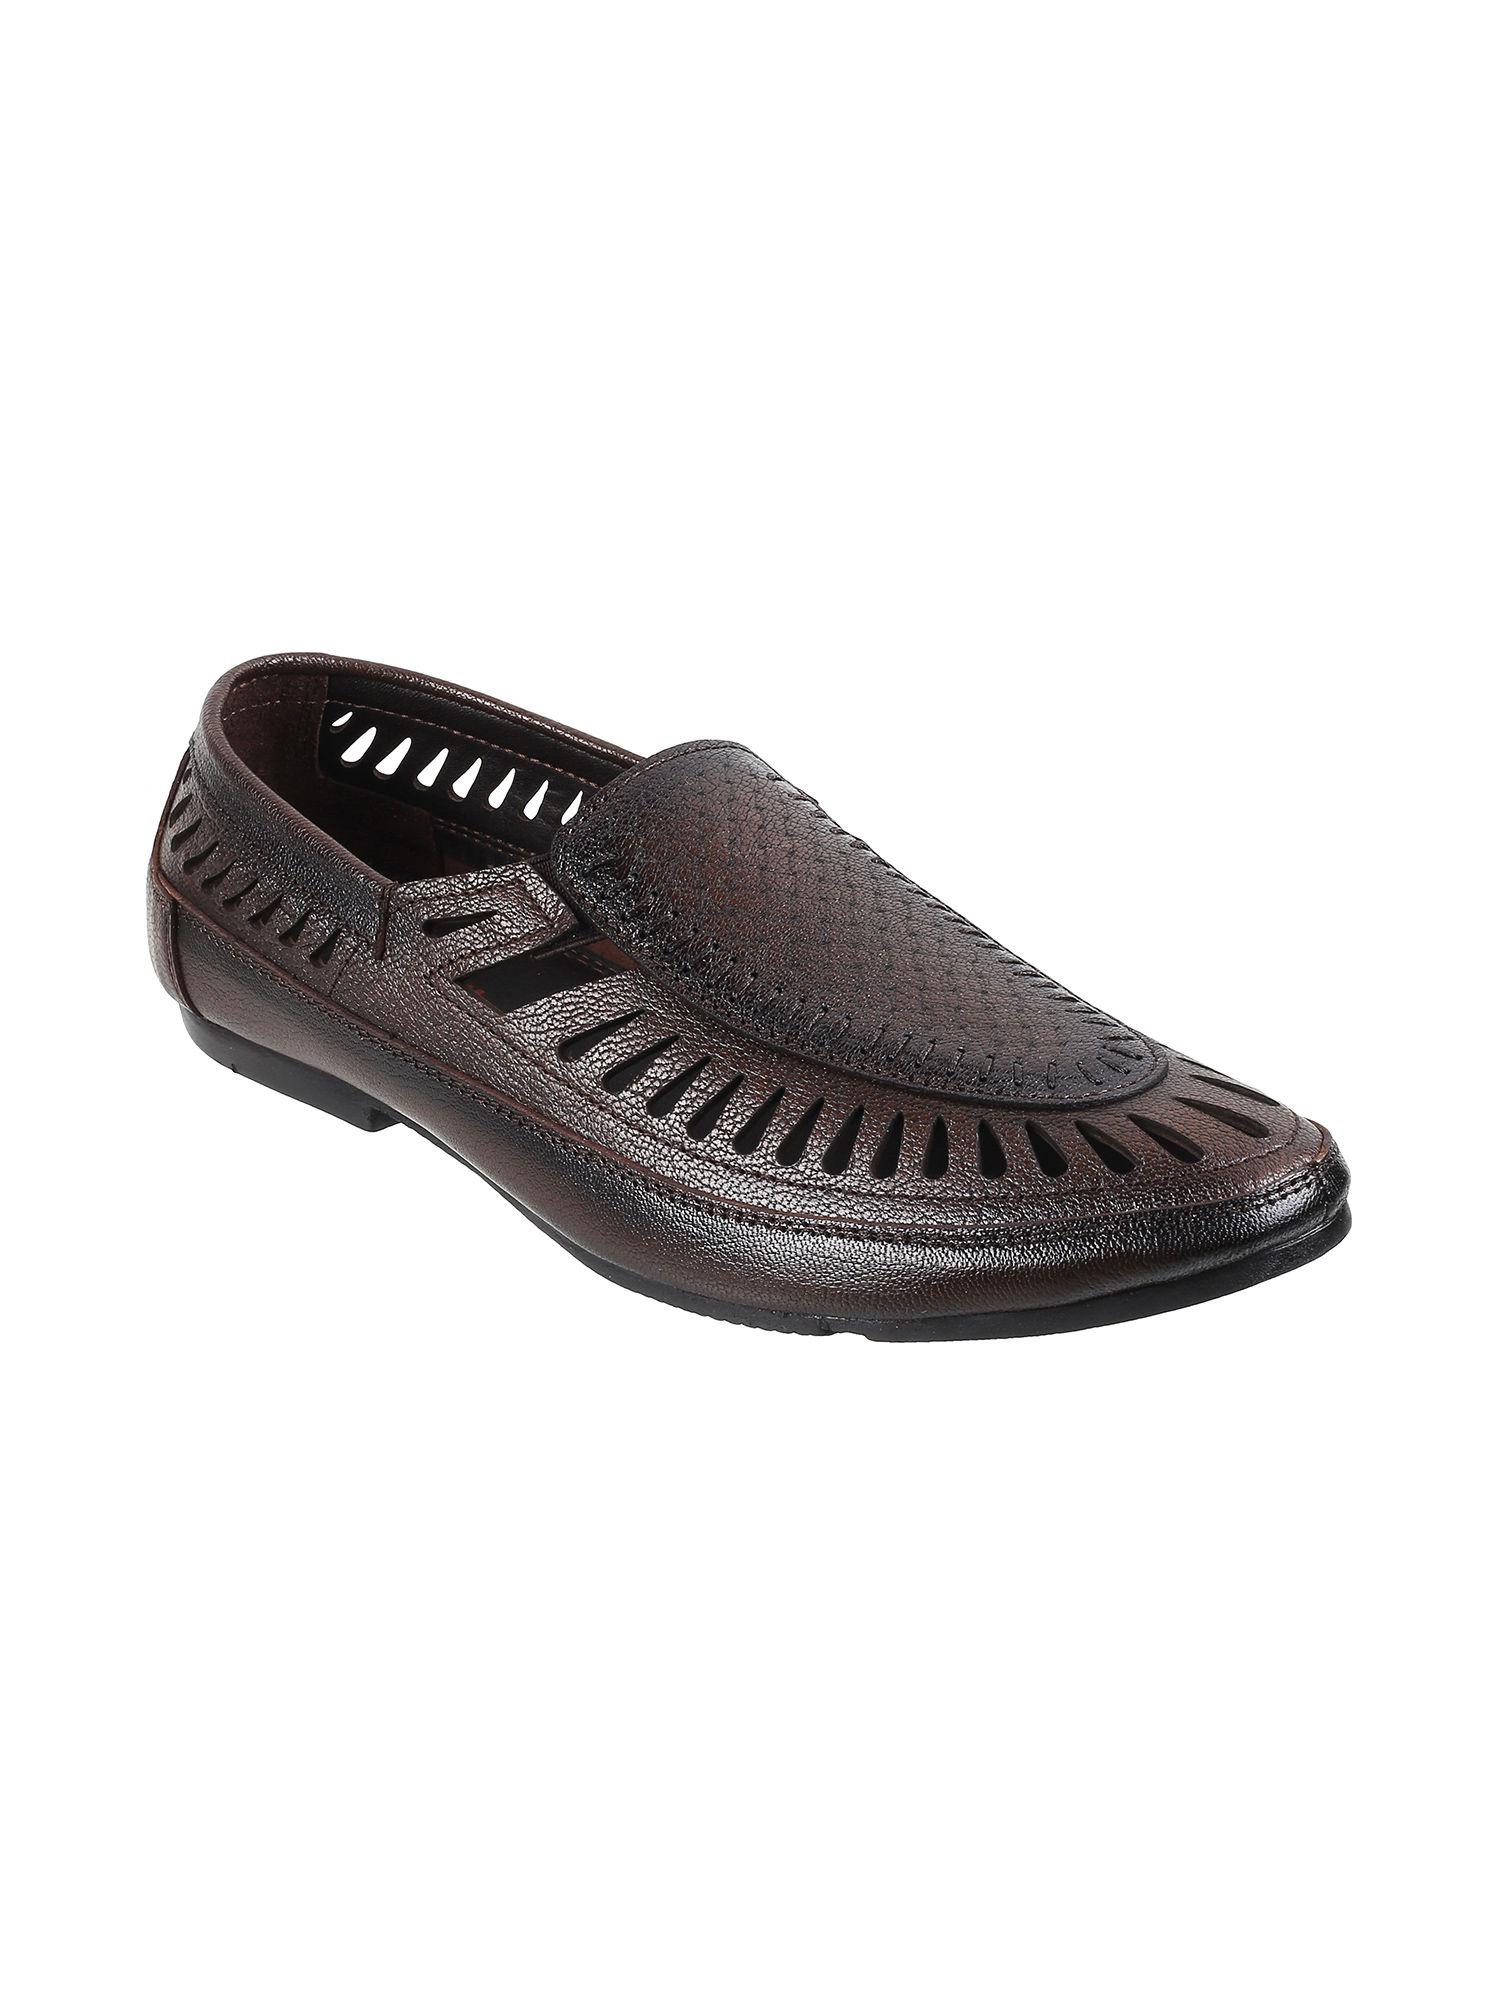 textured men leather brown sandals